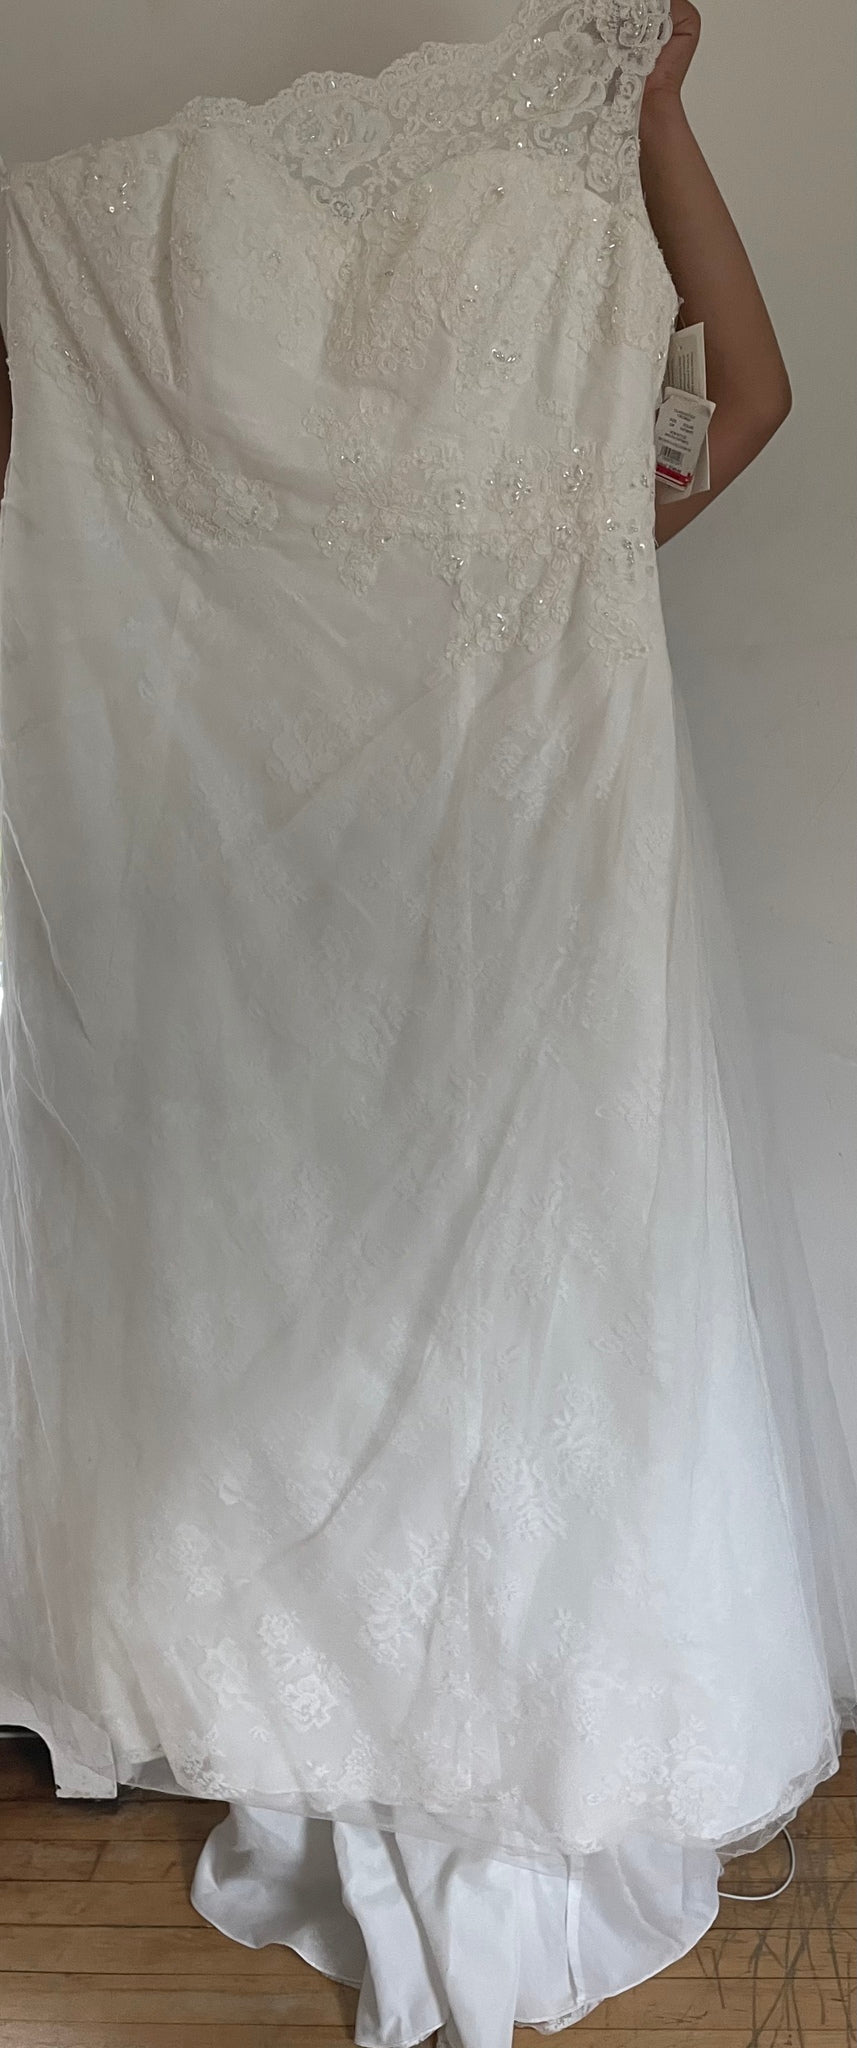 David's Bridal '13030022' wedding dress size-18 NEW